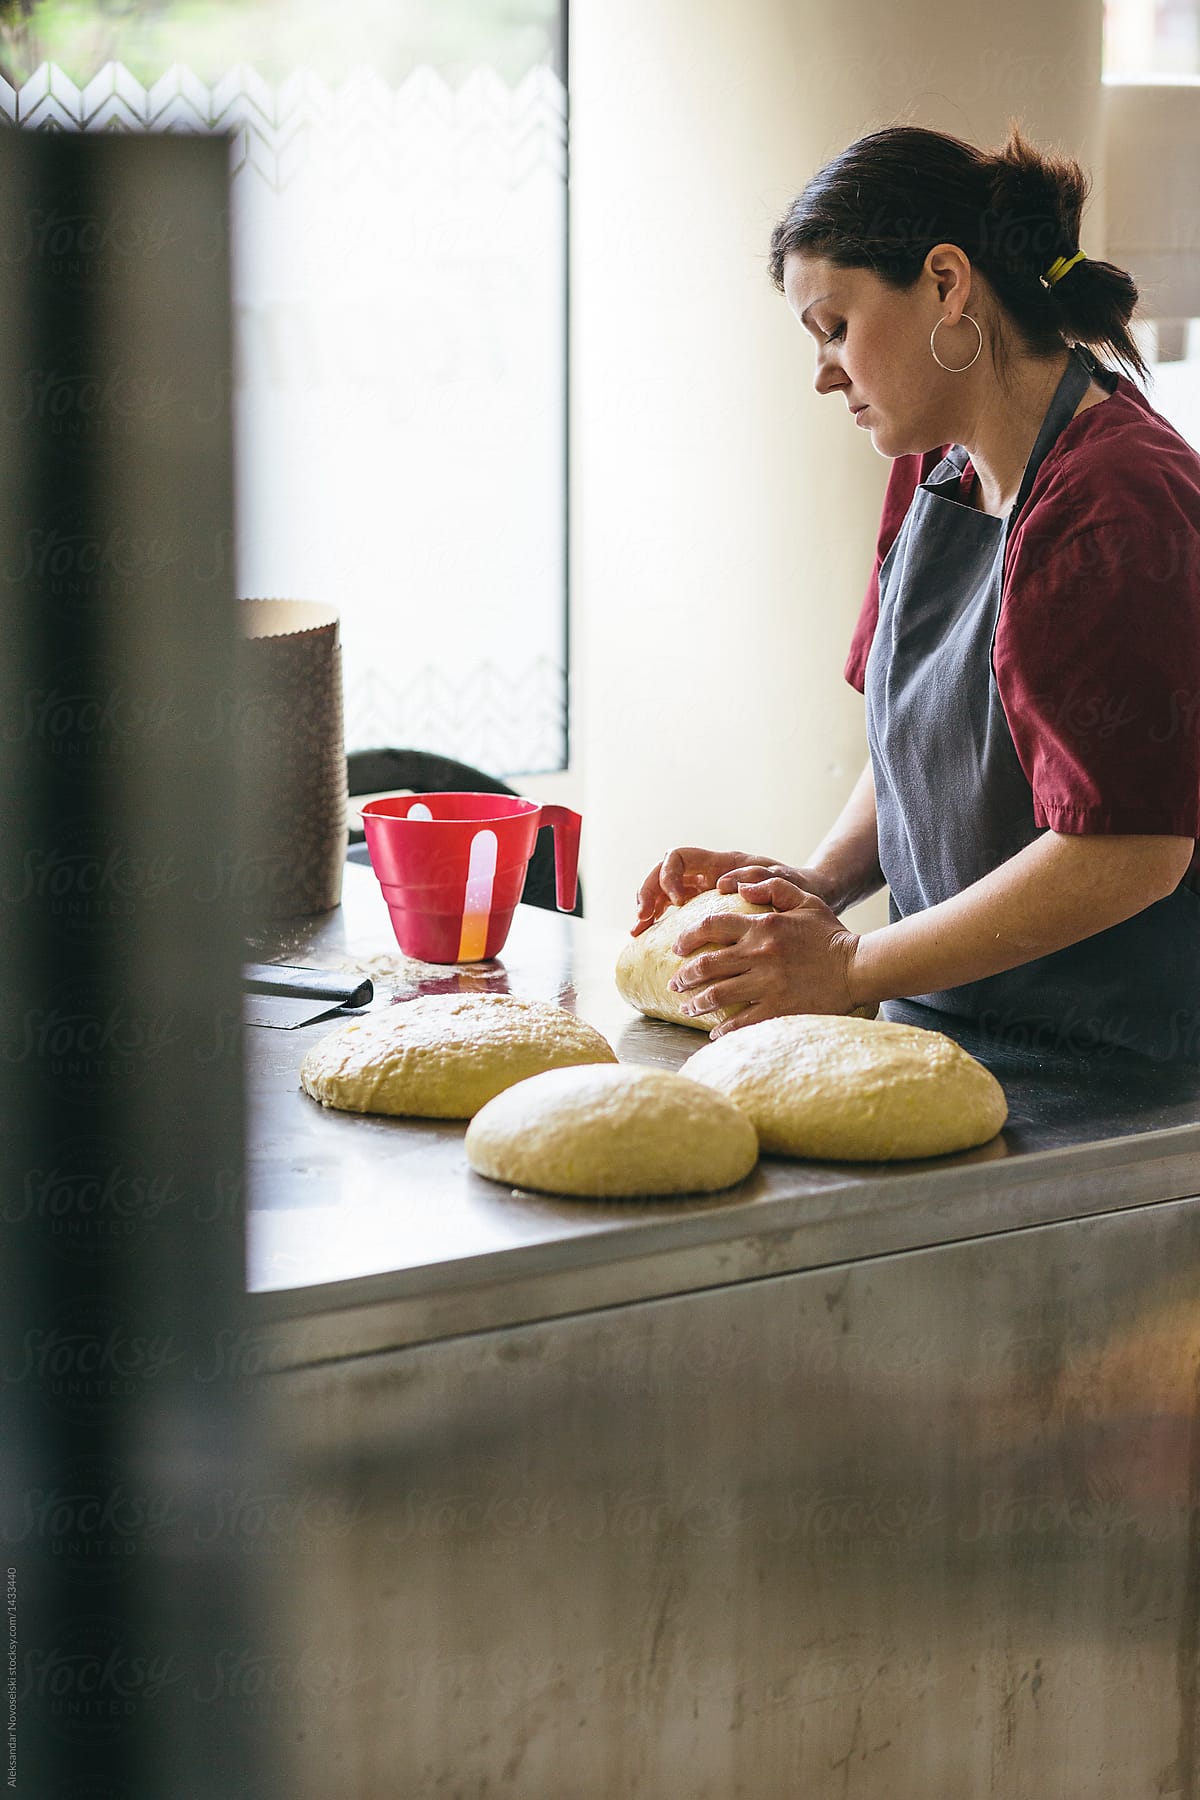 Preparing bread at the bakery